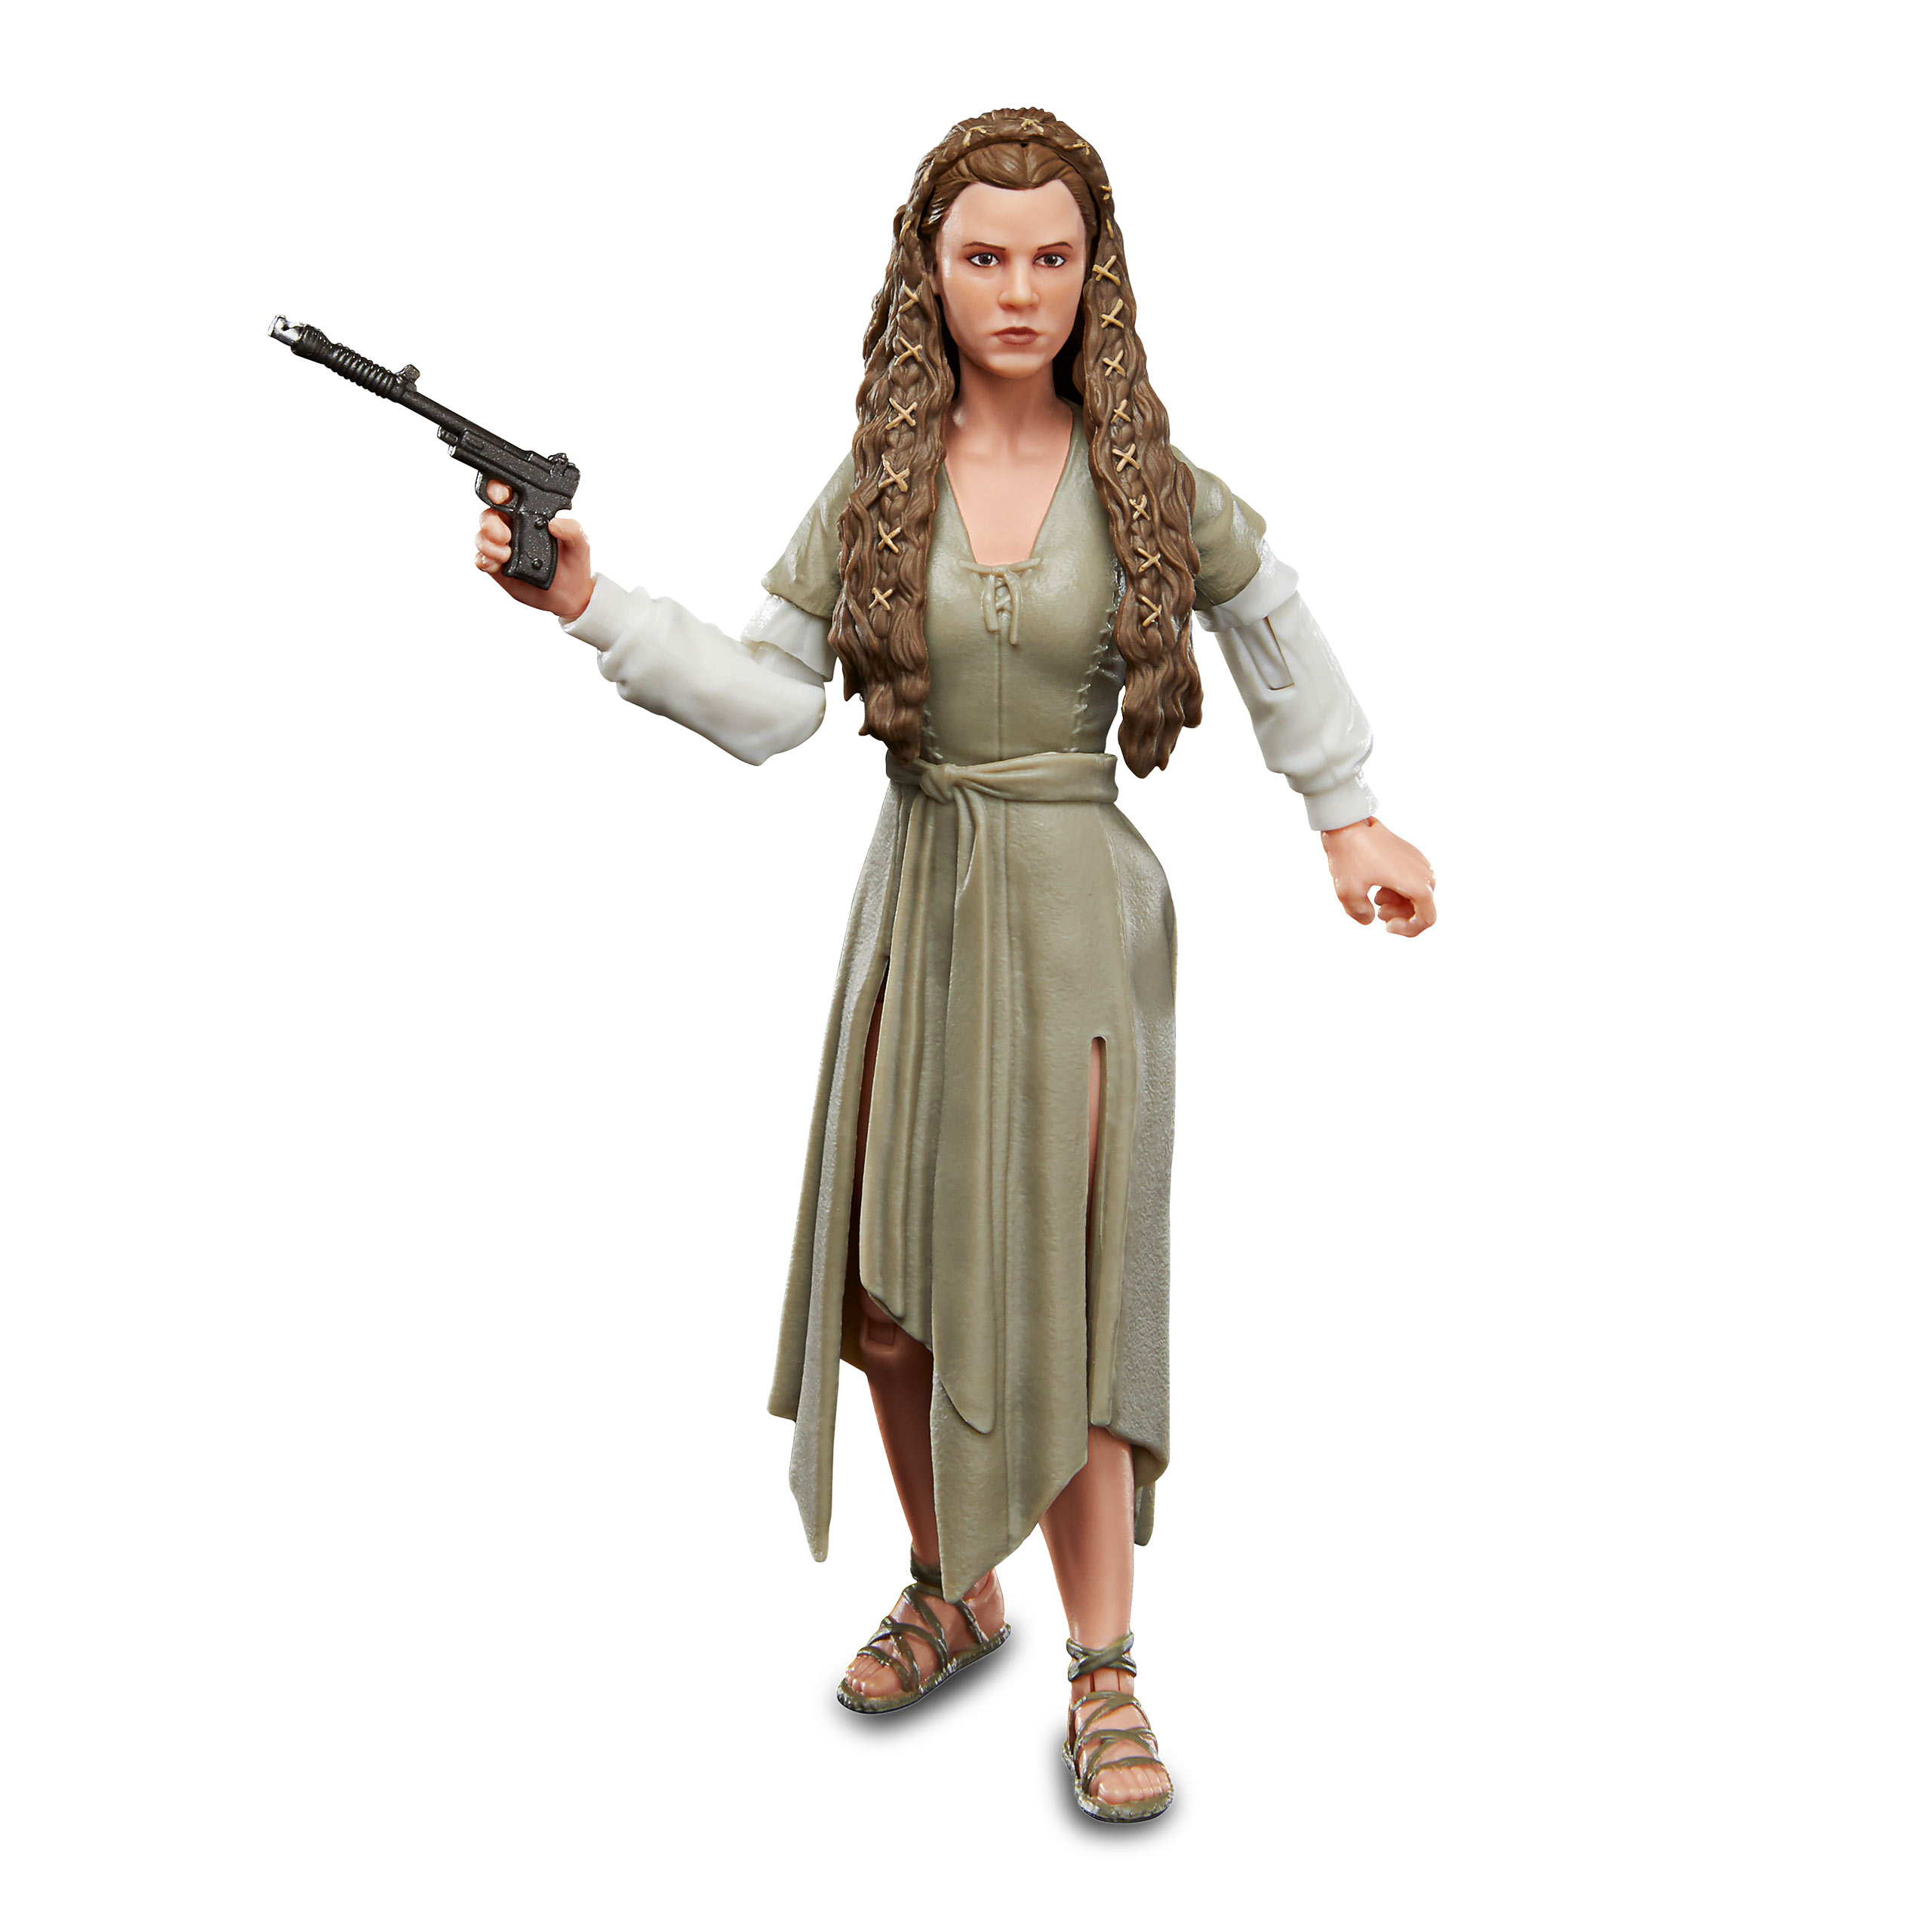 Star Wars - Prinses Leia Ewok Village Actiefiguur